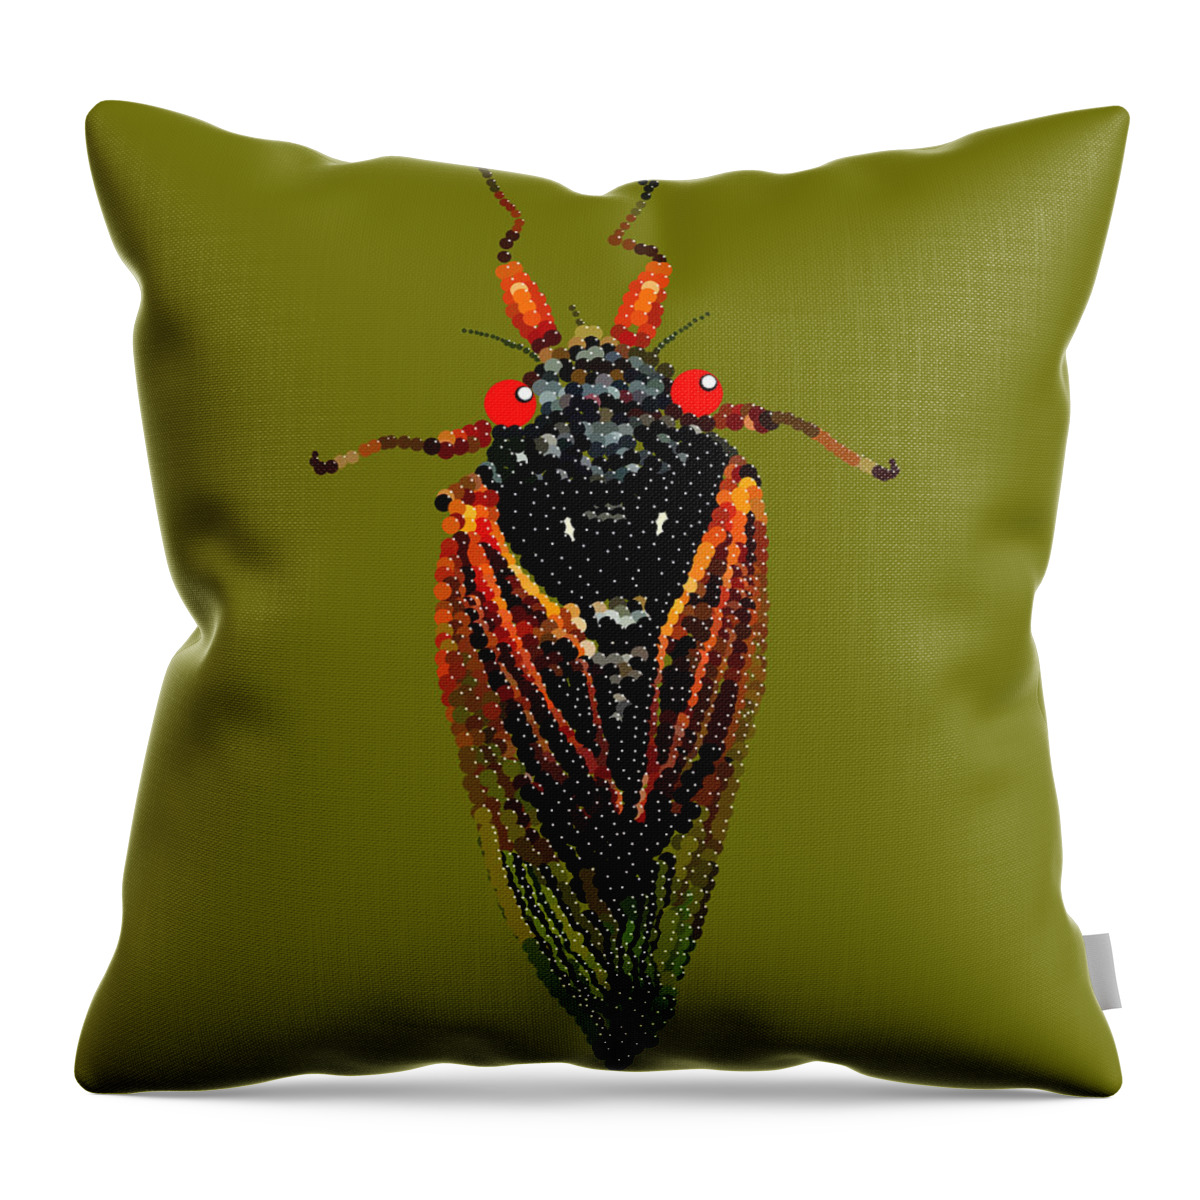  Throw Pillow featuring the digital art Cicada in Green by R Allen Swezey